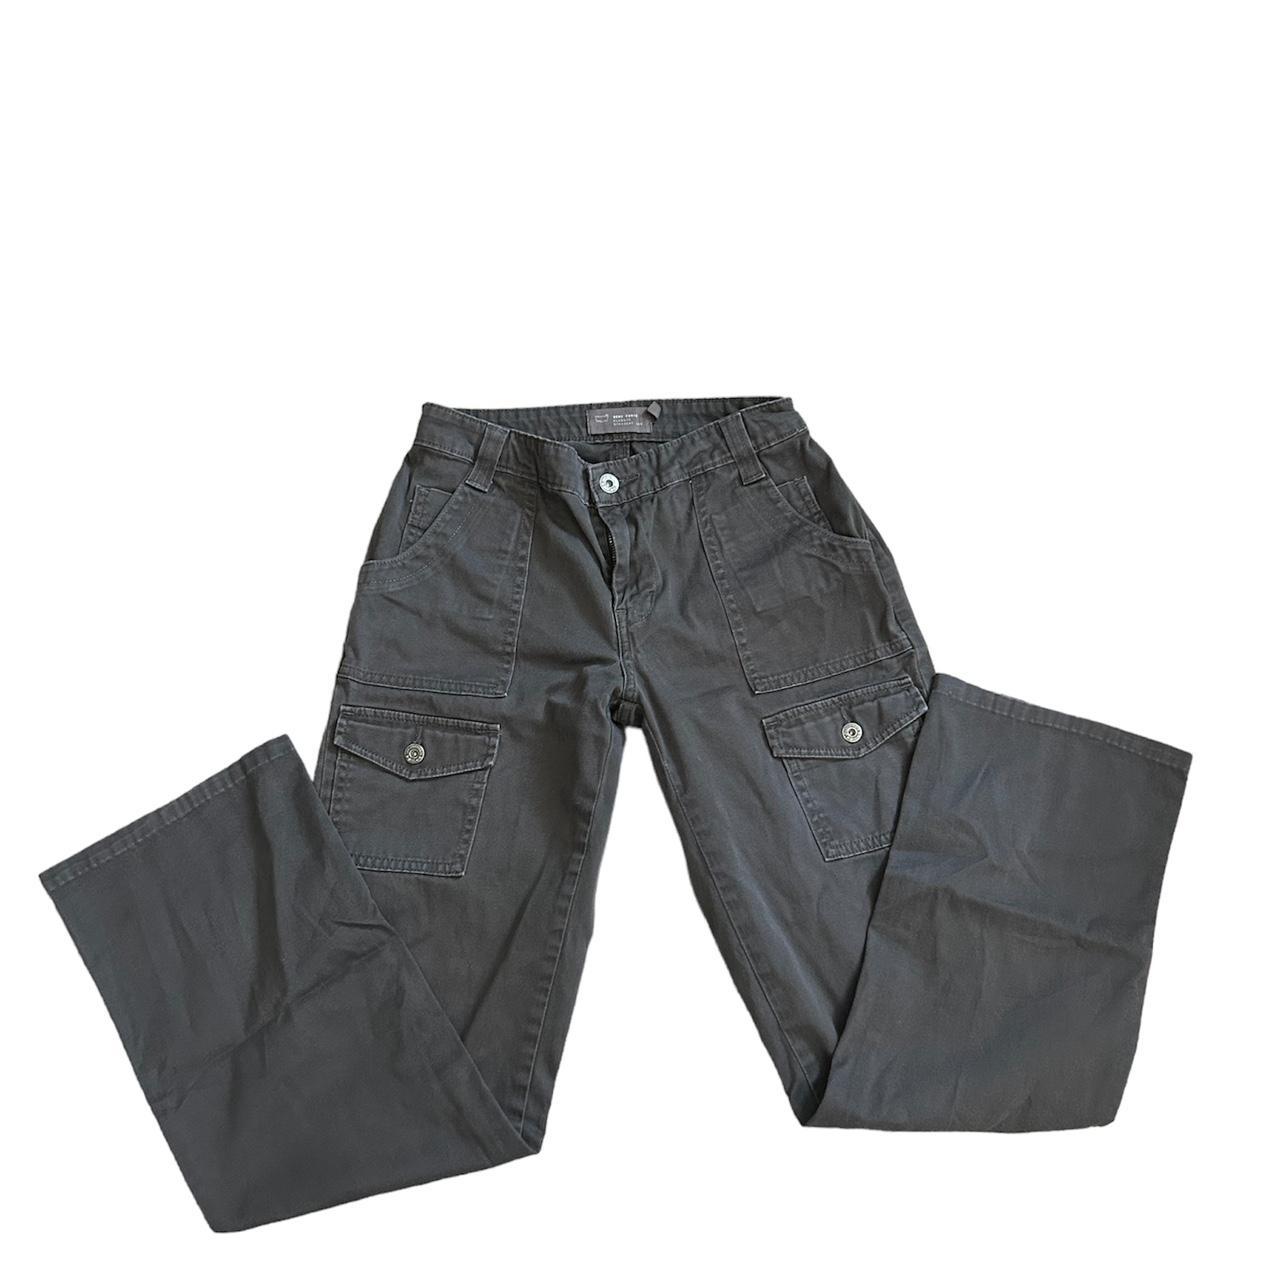 Grey cargo pants functional pockets great... - Depop